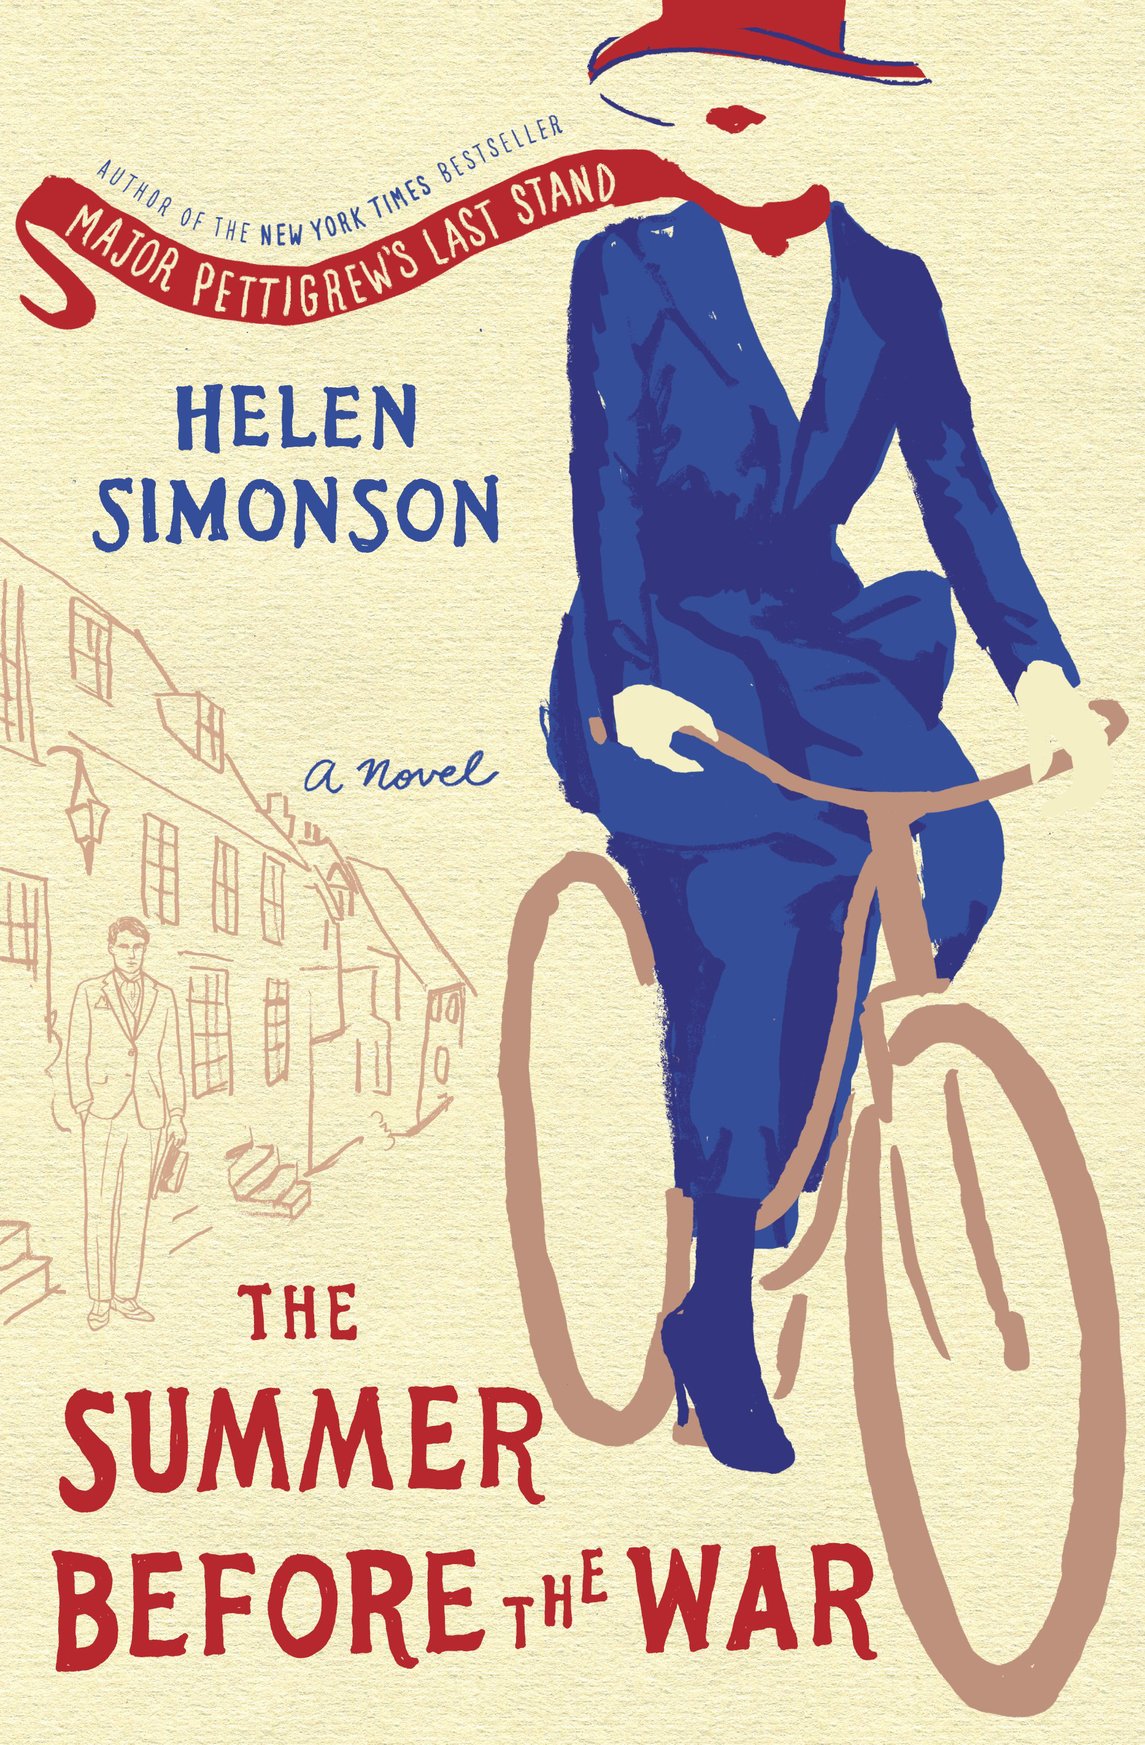 The Summer Before the War (2016) by Helen Simonson